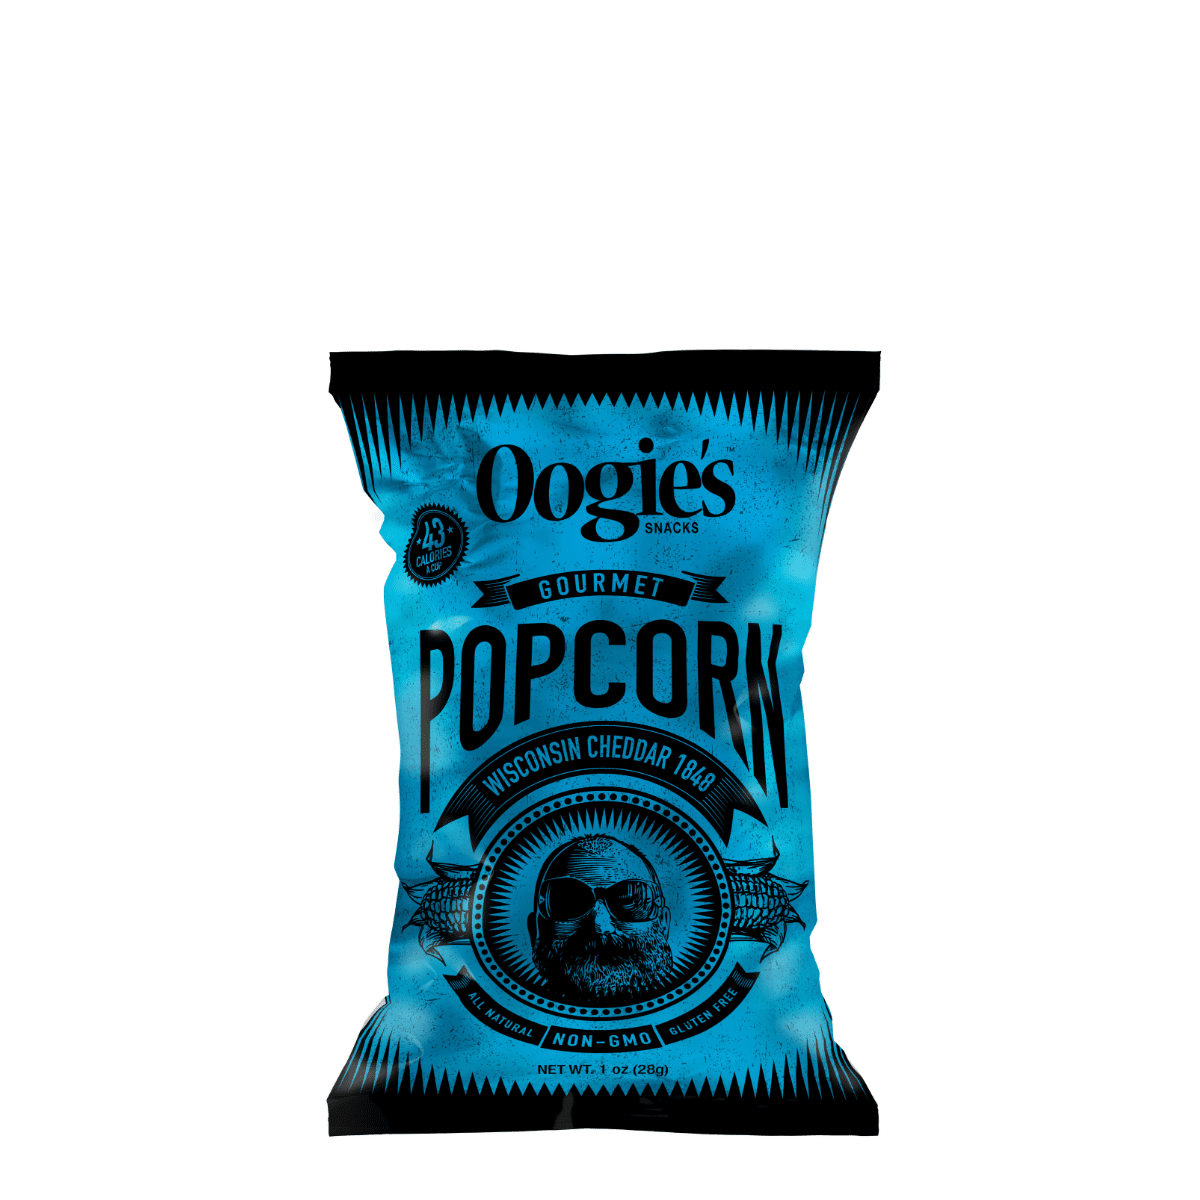 Wisconsin cheddar snack size popcorn bag